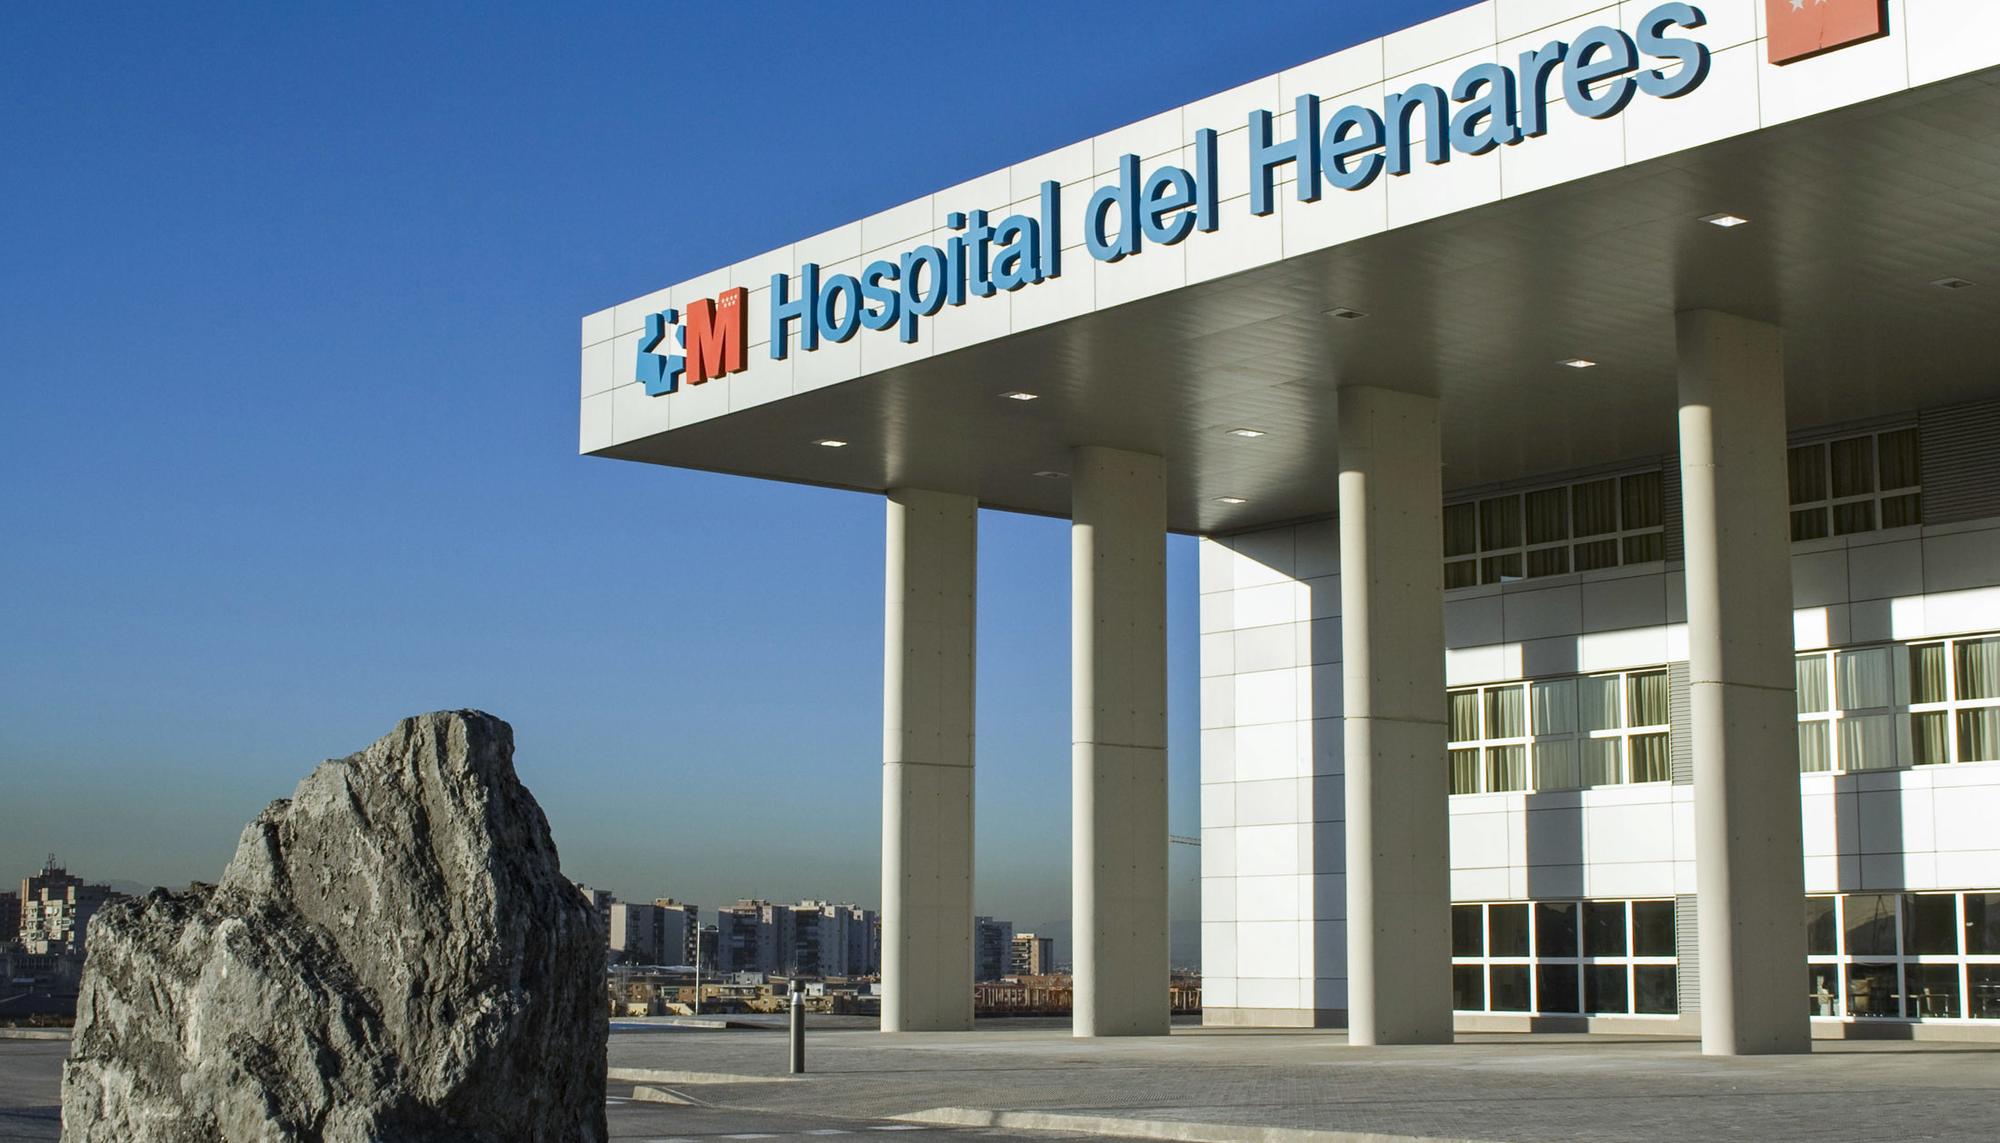 Hospital del Henares